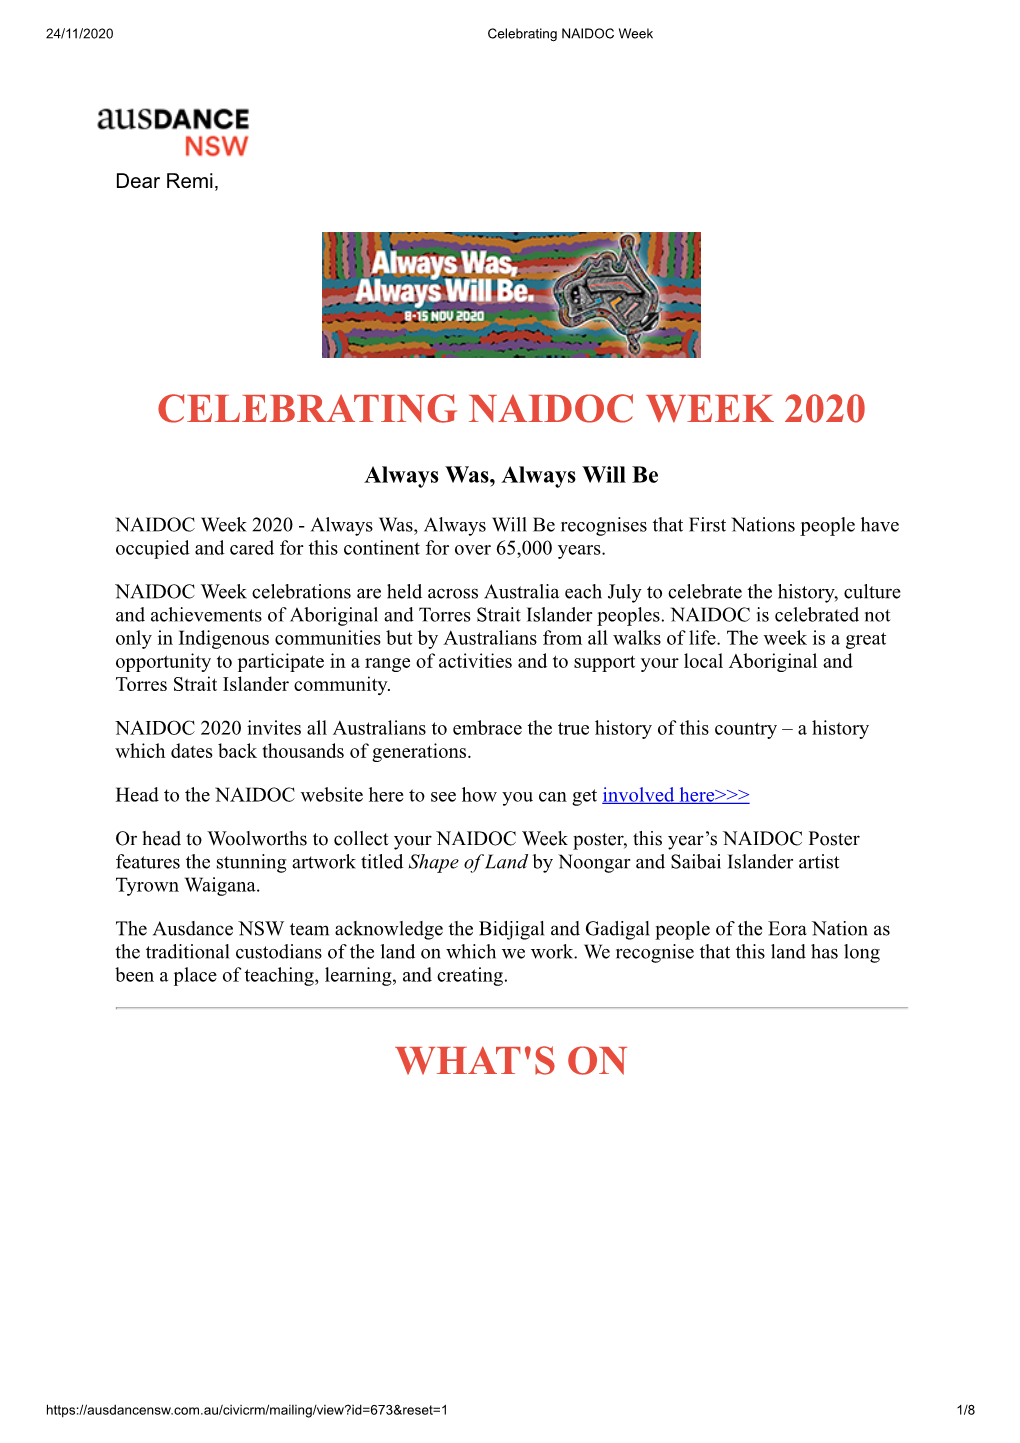 Celebrating Naidoc Week 2020 What's On